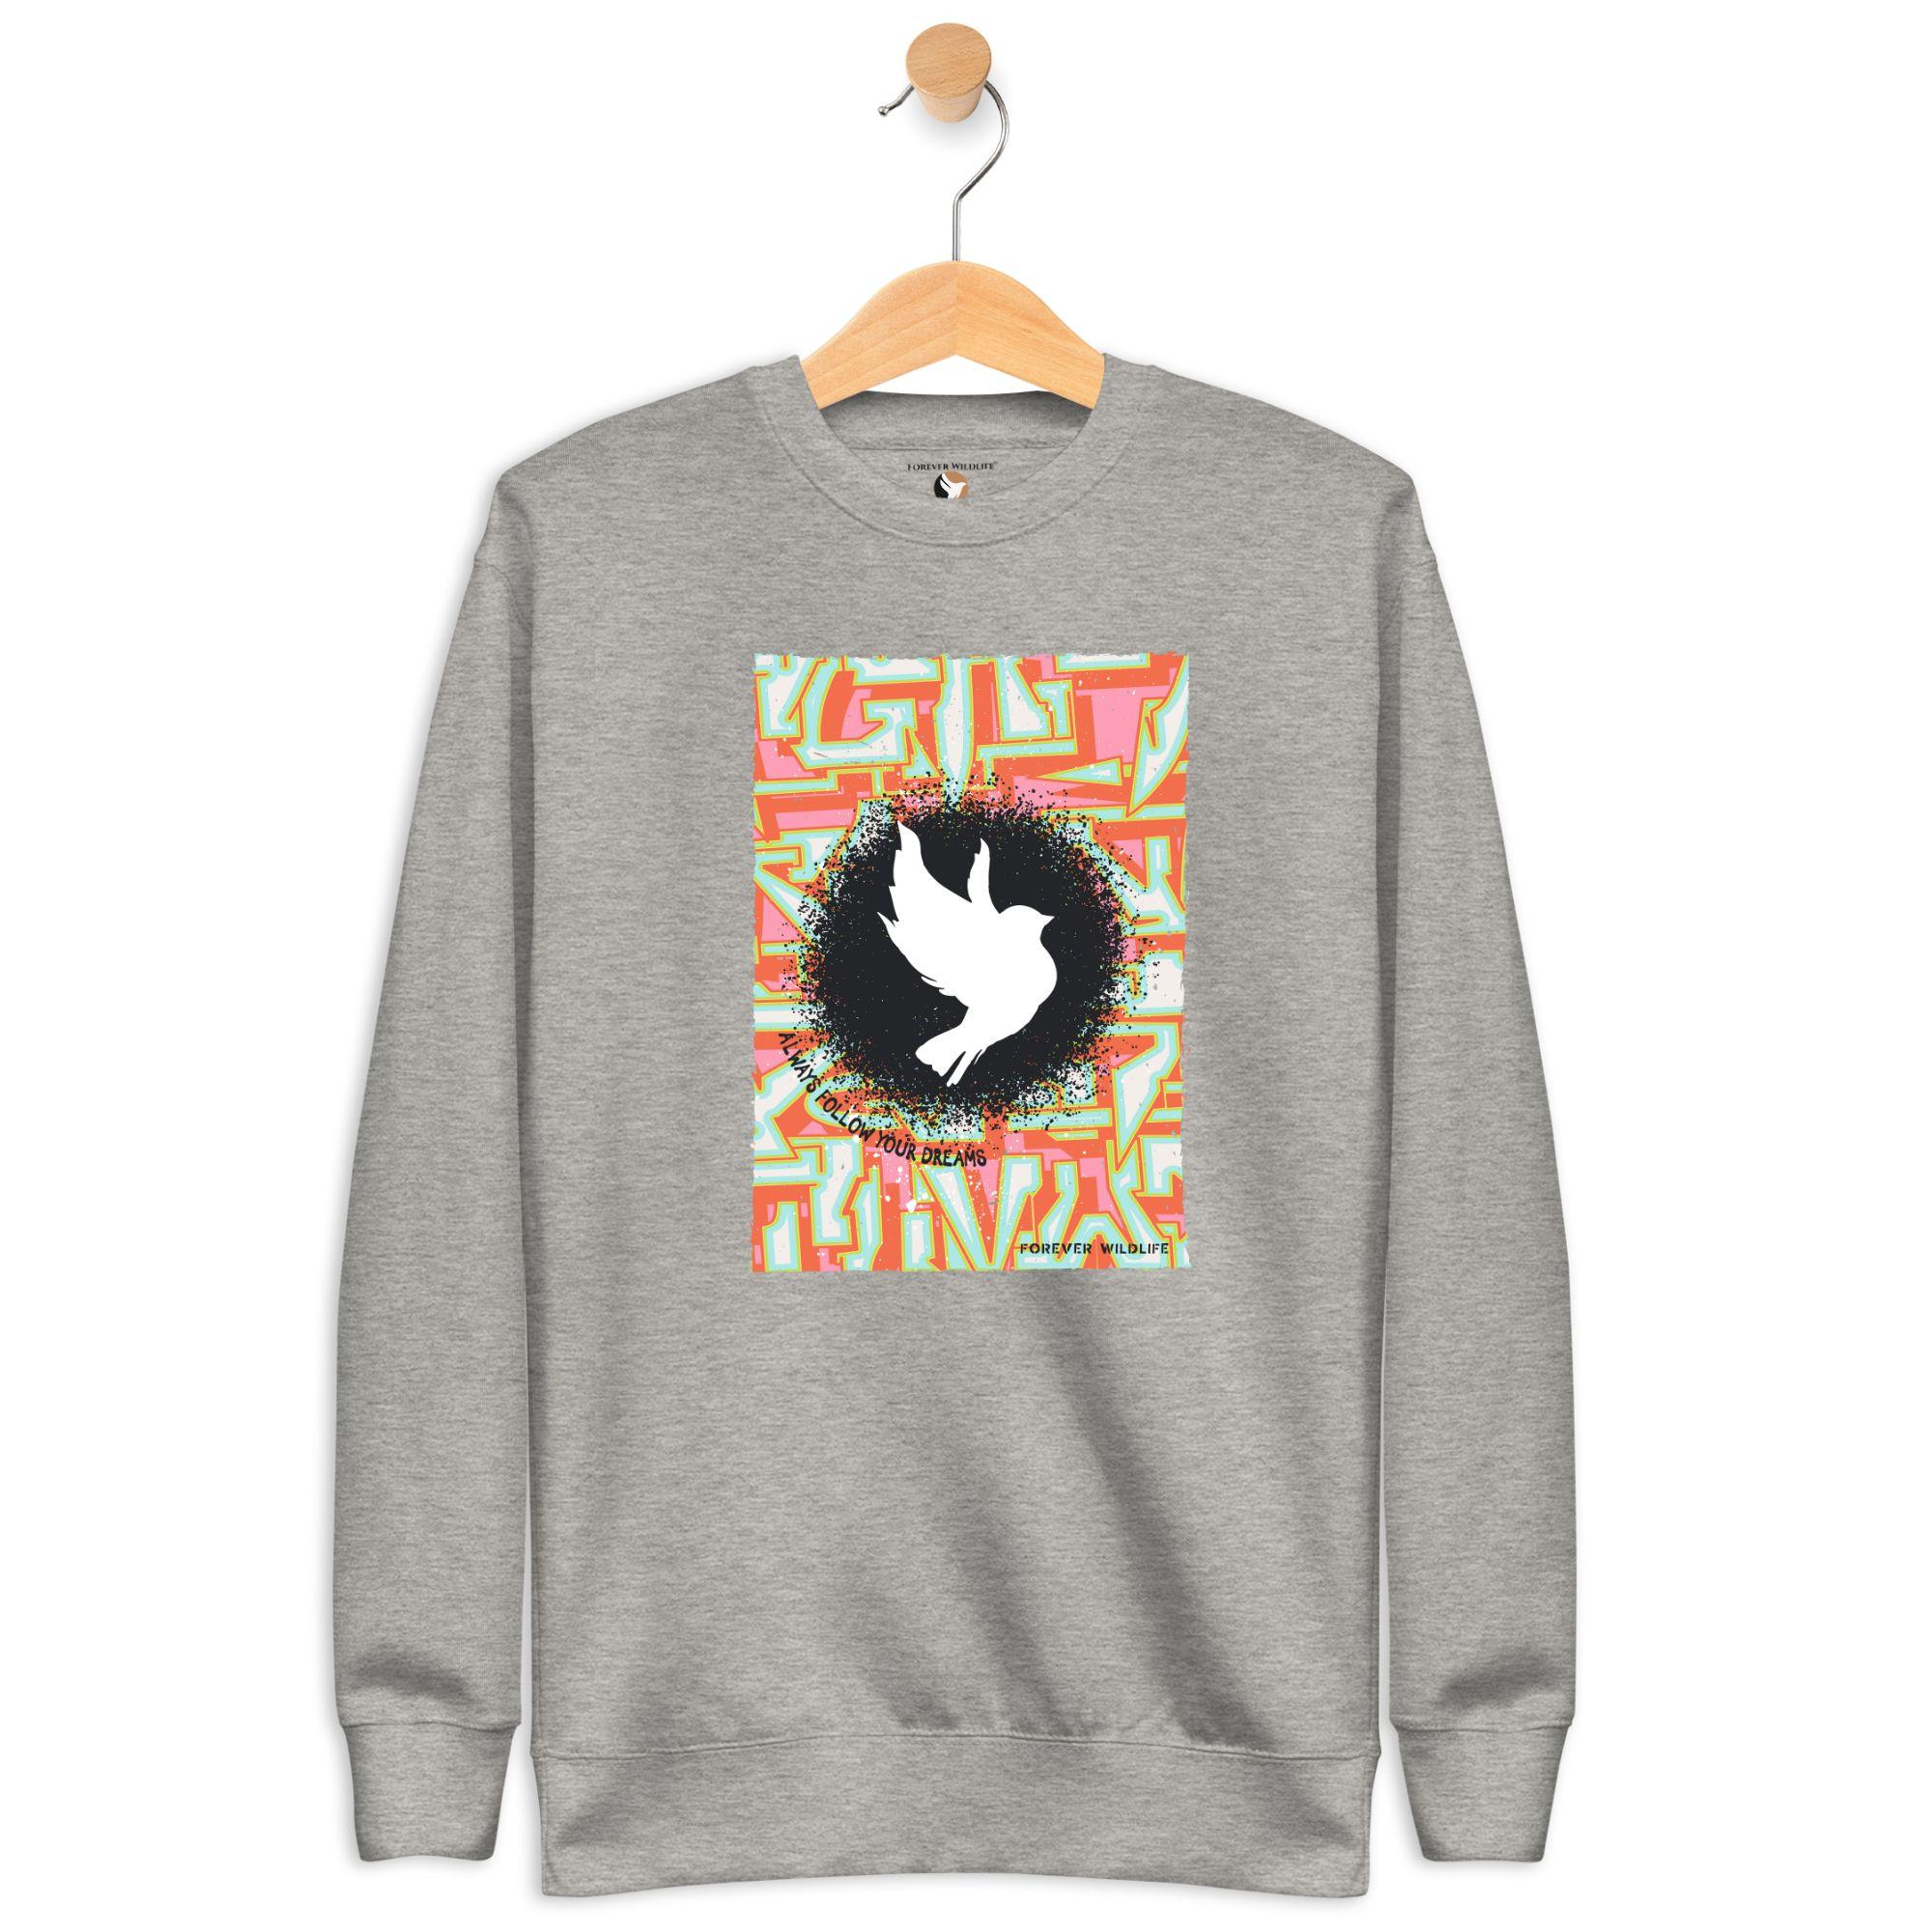 Dove Sweatshirt in Grey-Premium Wildlife Animal Inspiration Sweatshirt Design with 'Always Follow Your Dreams' text, part of Wildlife Sweatshirts & Clothing from Forever Wildlife.